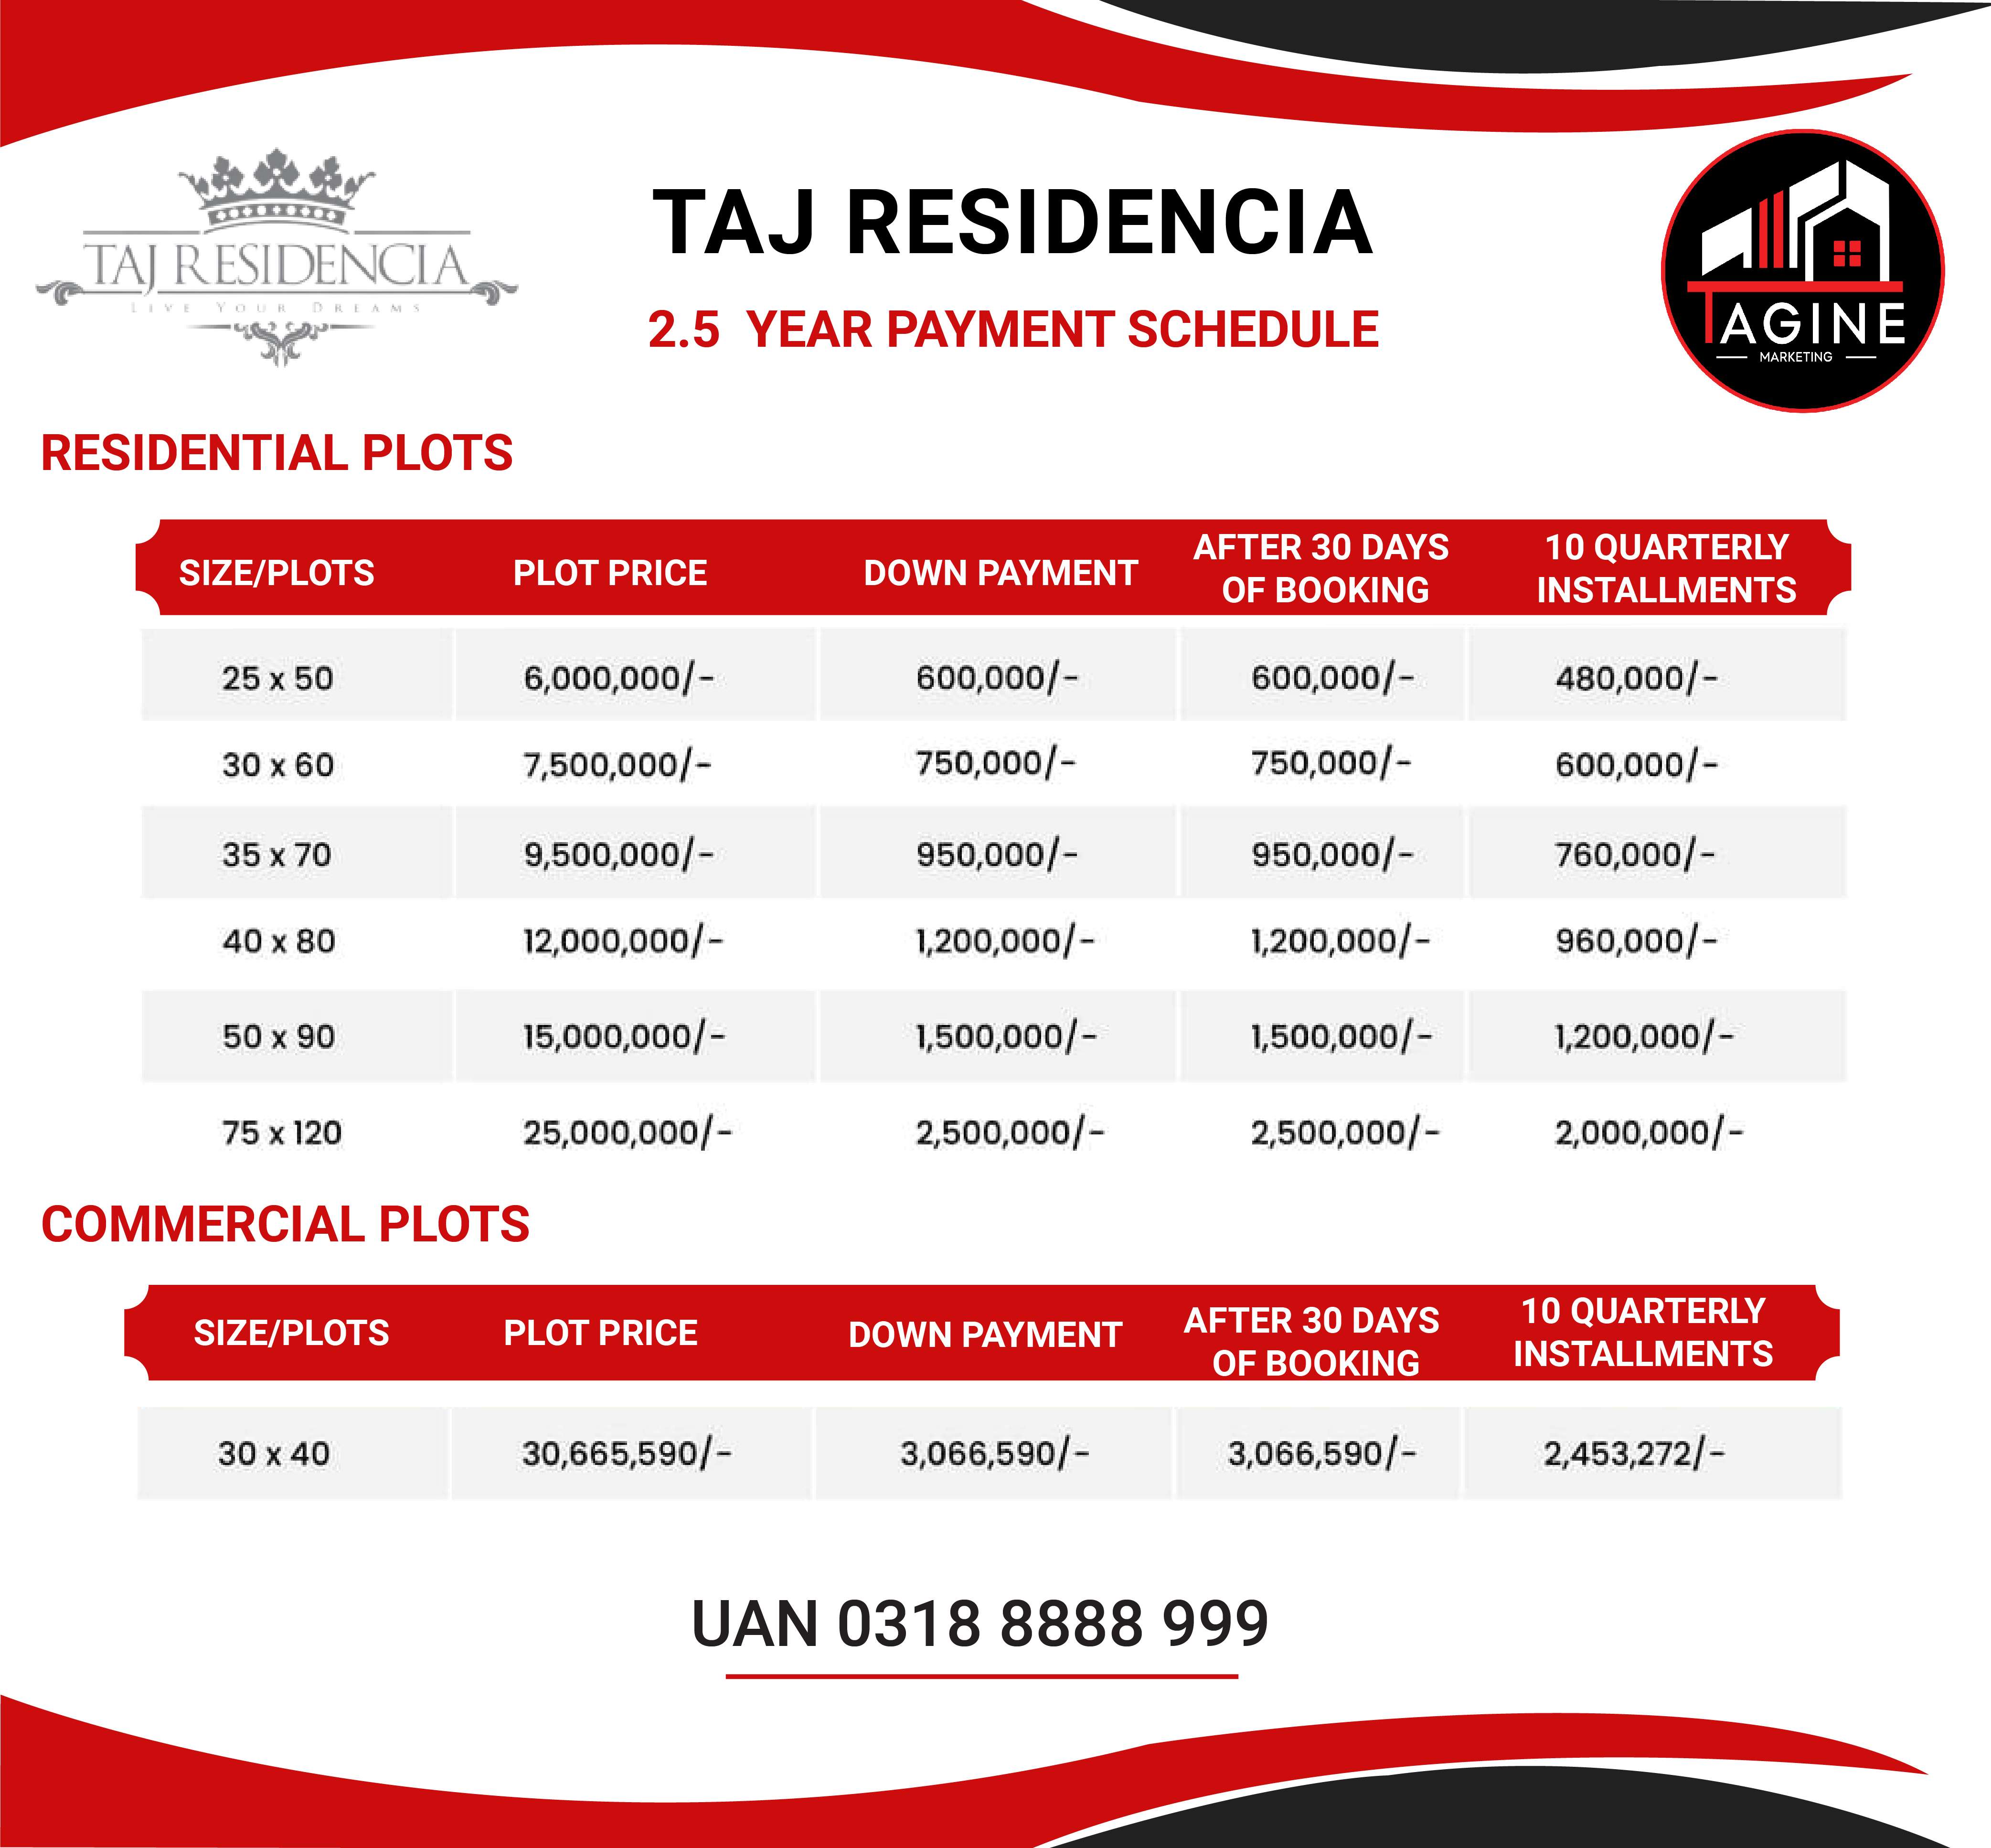 TAJ-RESIDENCIA-PAYMENT-PLAN-2.5-YEAR-01